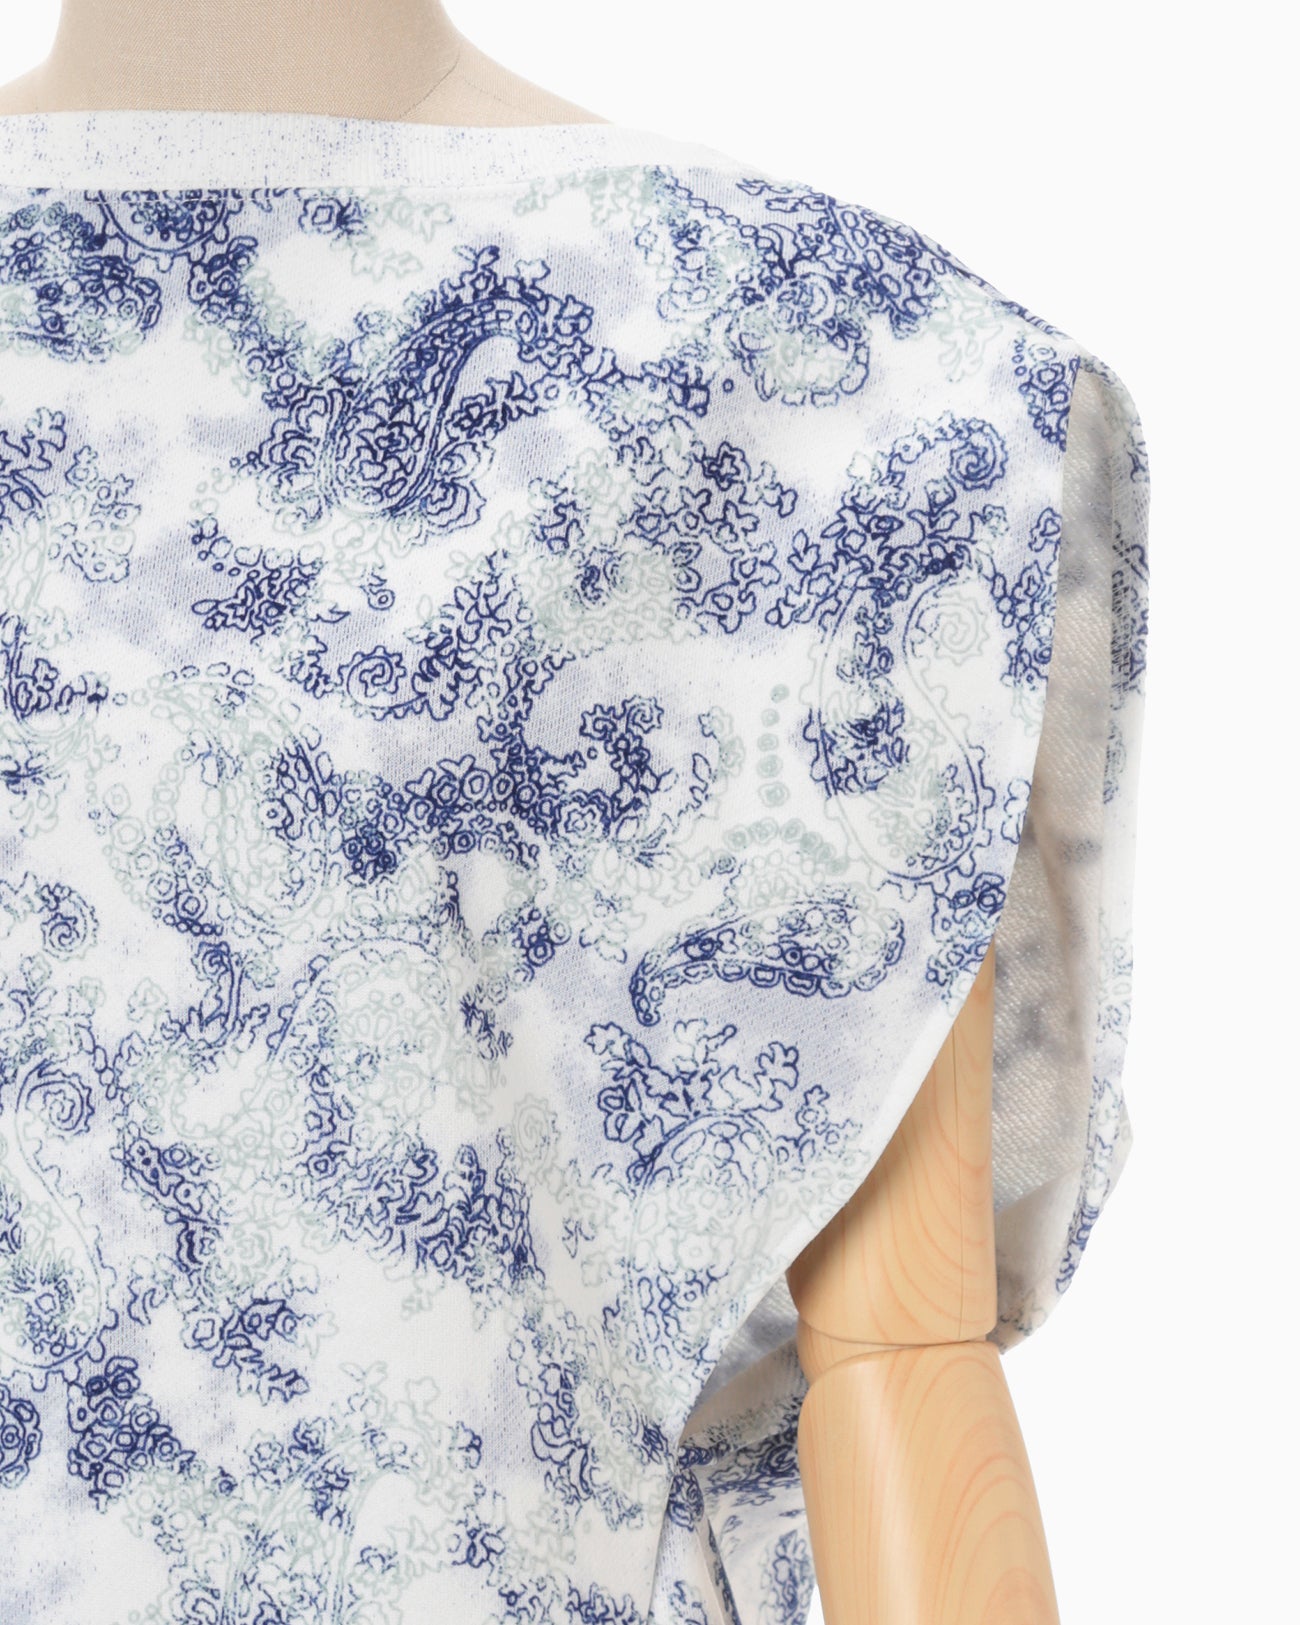 Floral Flock Printed Fleece Lining Sleeveless Top - blue